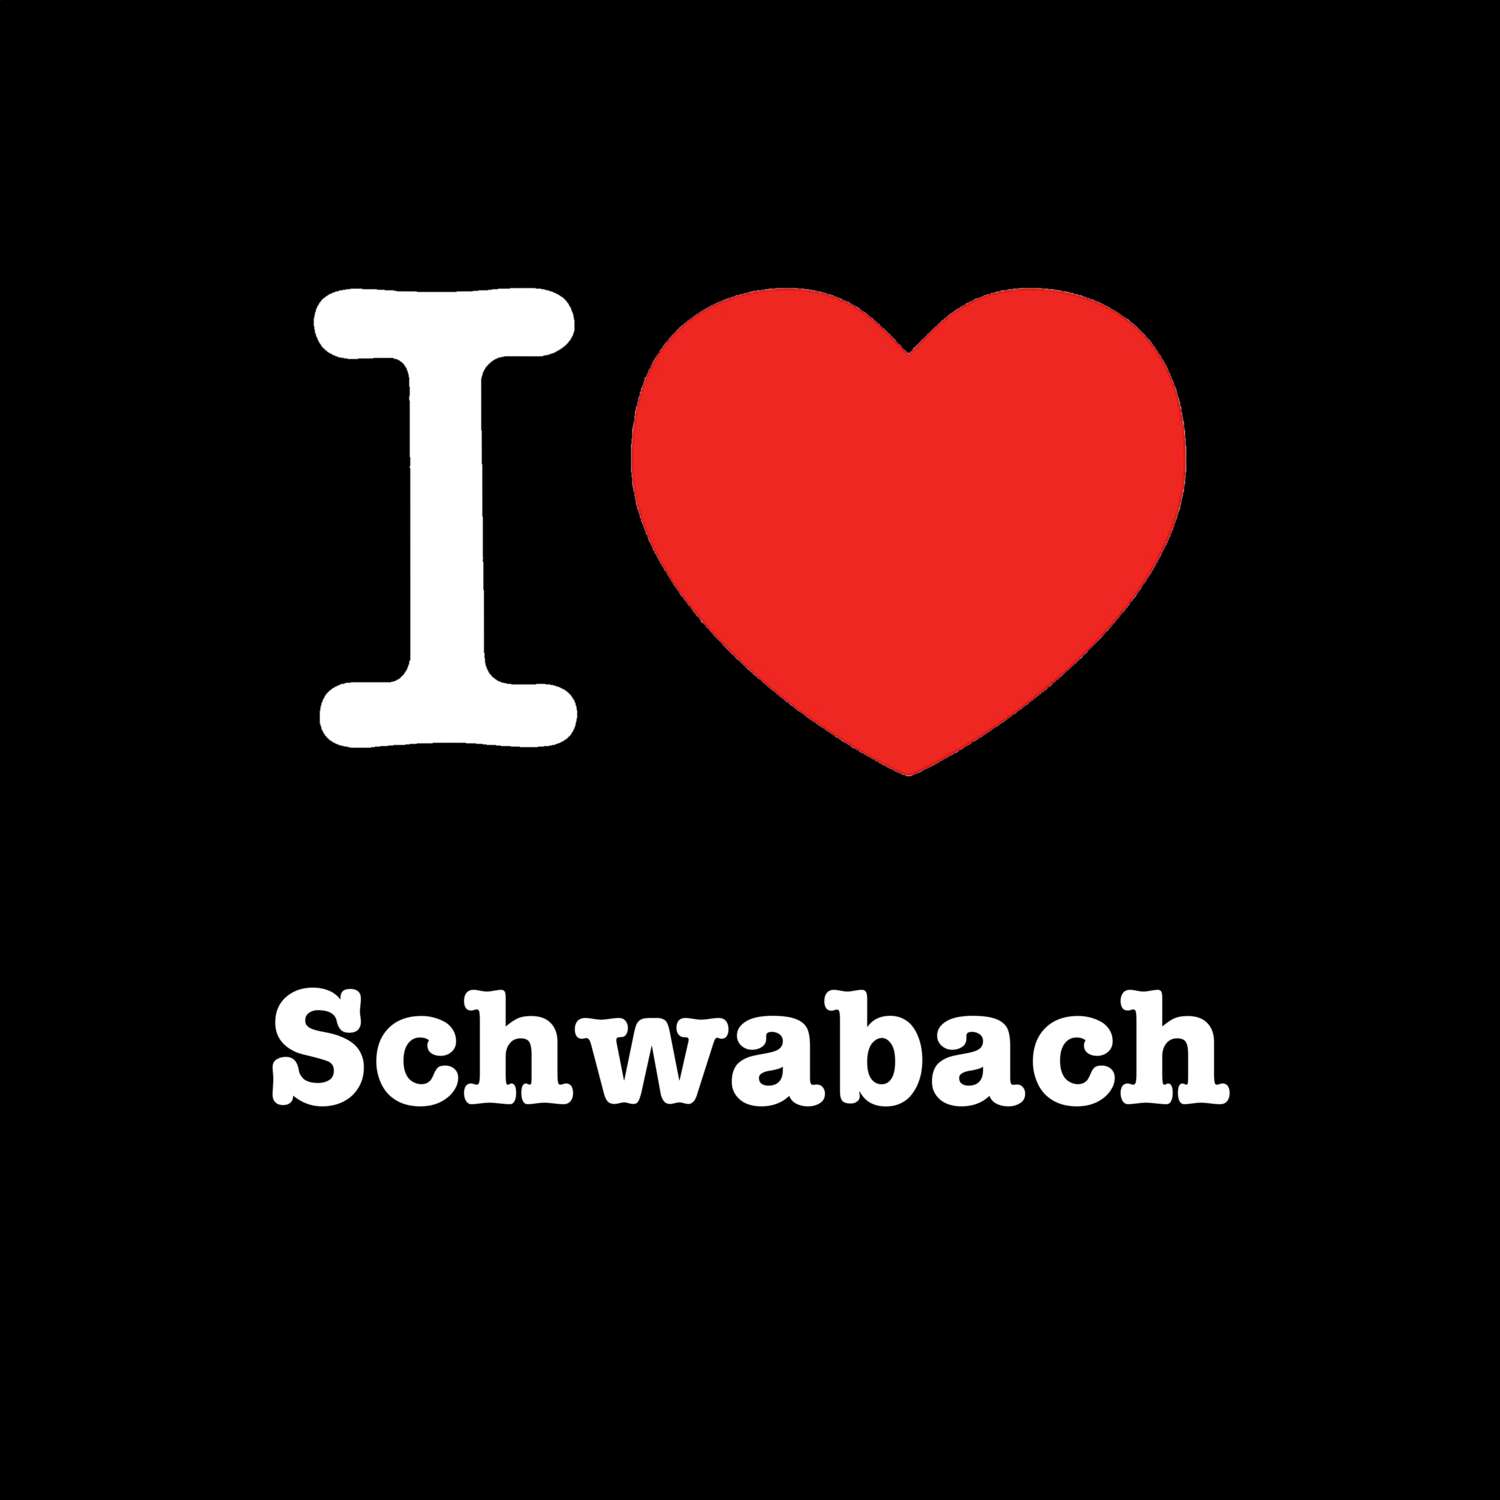 Schwabach T-Shirt »I love«